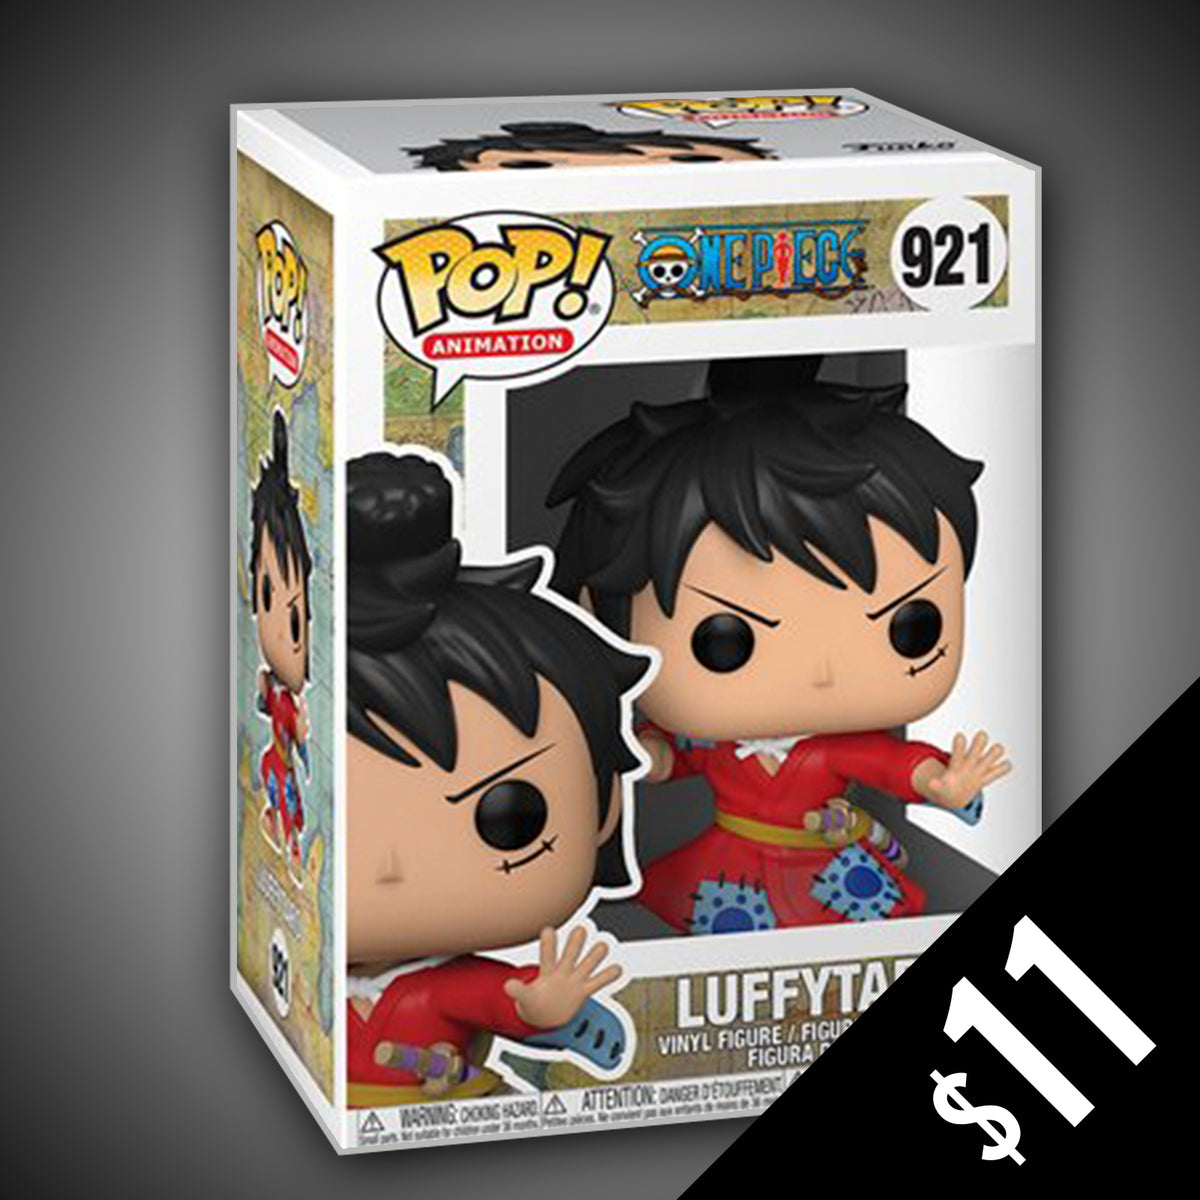 Figurine Luffytaro / One Piece / Funko Pop Animation 921 / Exclusive  Special Edition